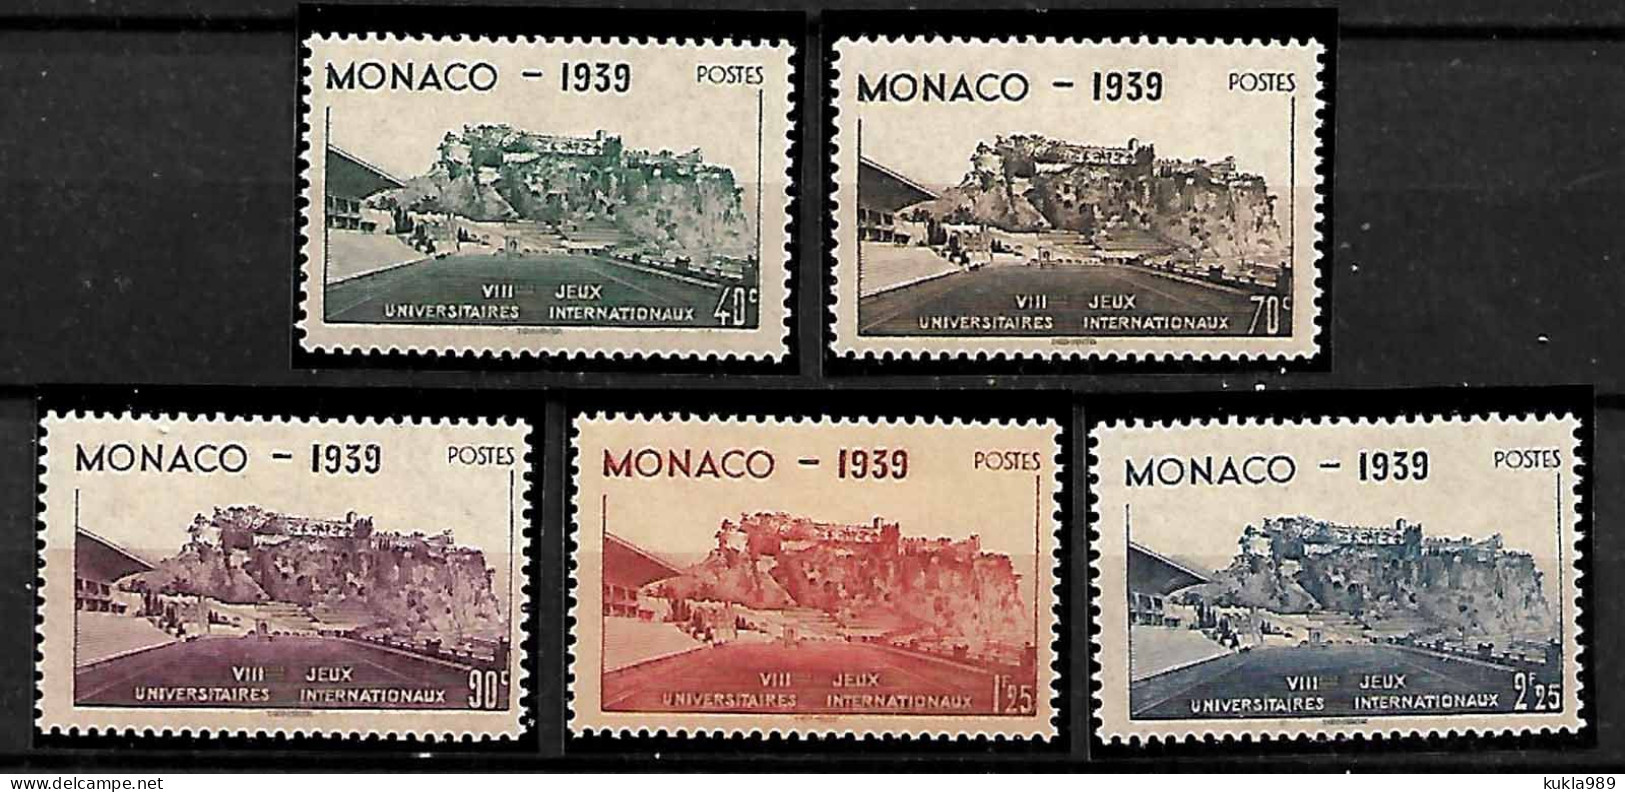 MONACO STAMPS 1939 , Sc.#177-181, MNH - Unused Stamps